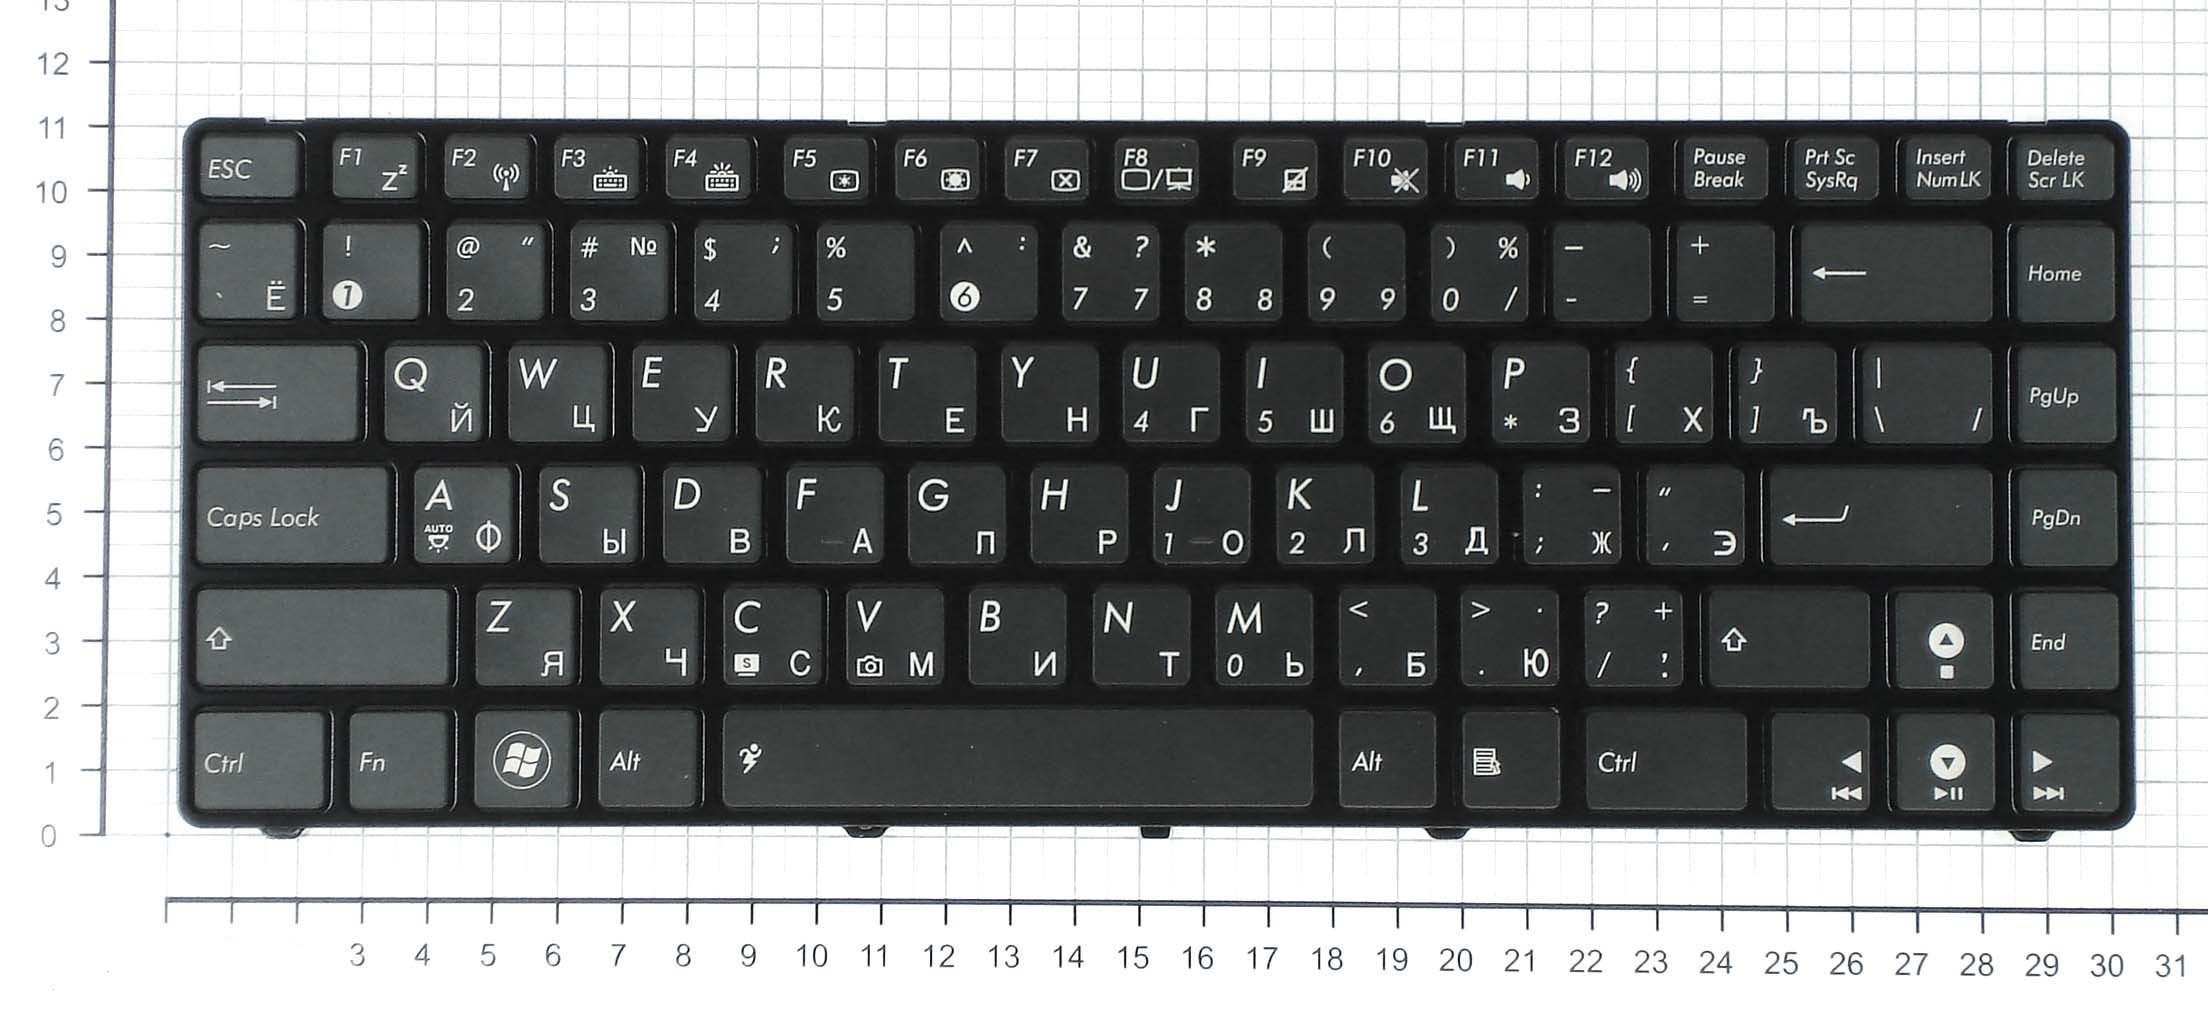 Клавиатура для ноутбука Asus UL80AG